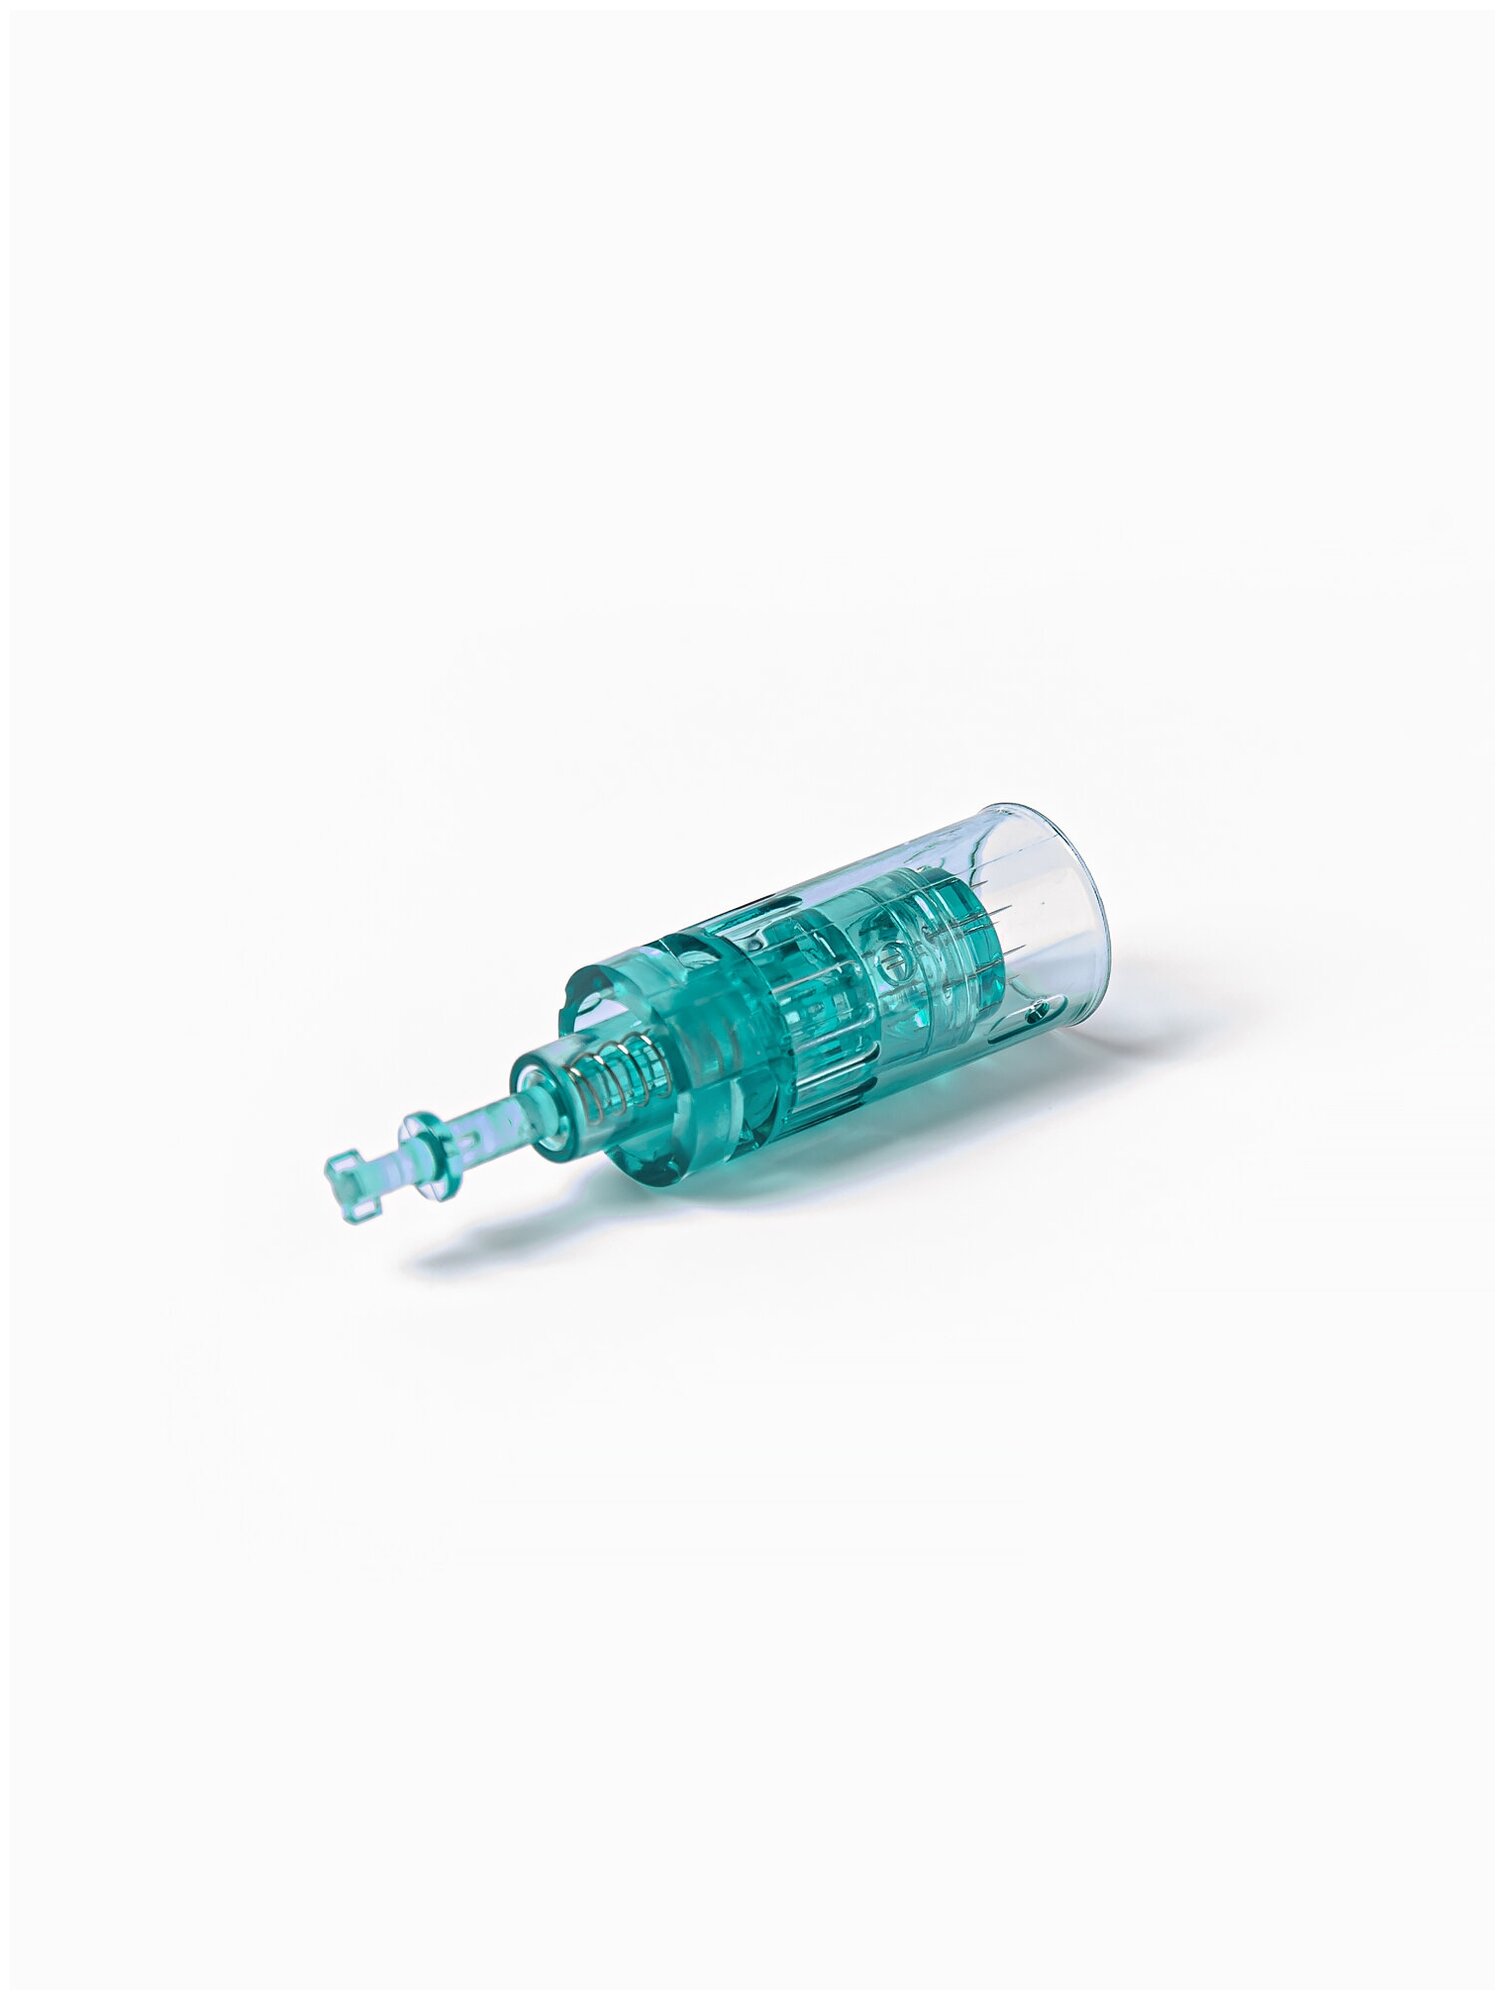 Dr.pen Картридж для дермапен мезопен / на 11 игл / насадка для аппарата дермапен dr pen ULTIMA-A6s-W, 5 шт. - фотография № 9